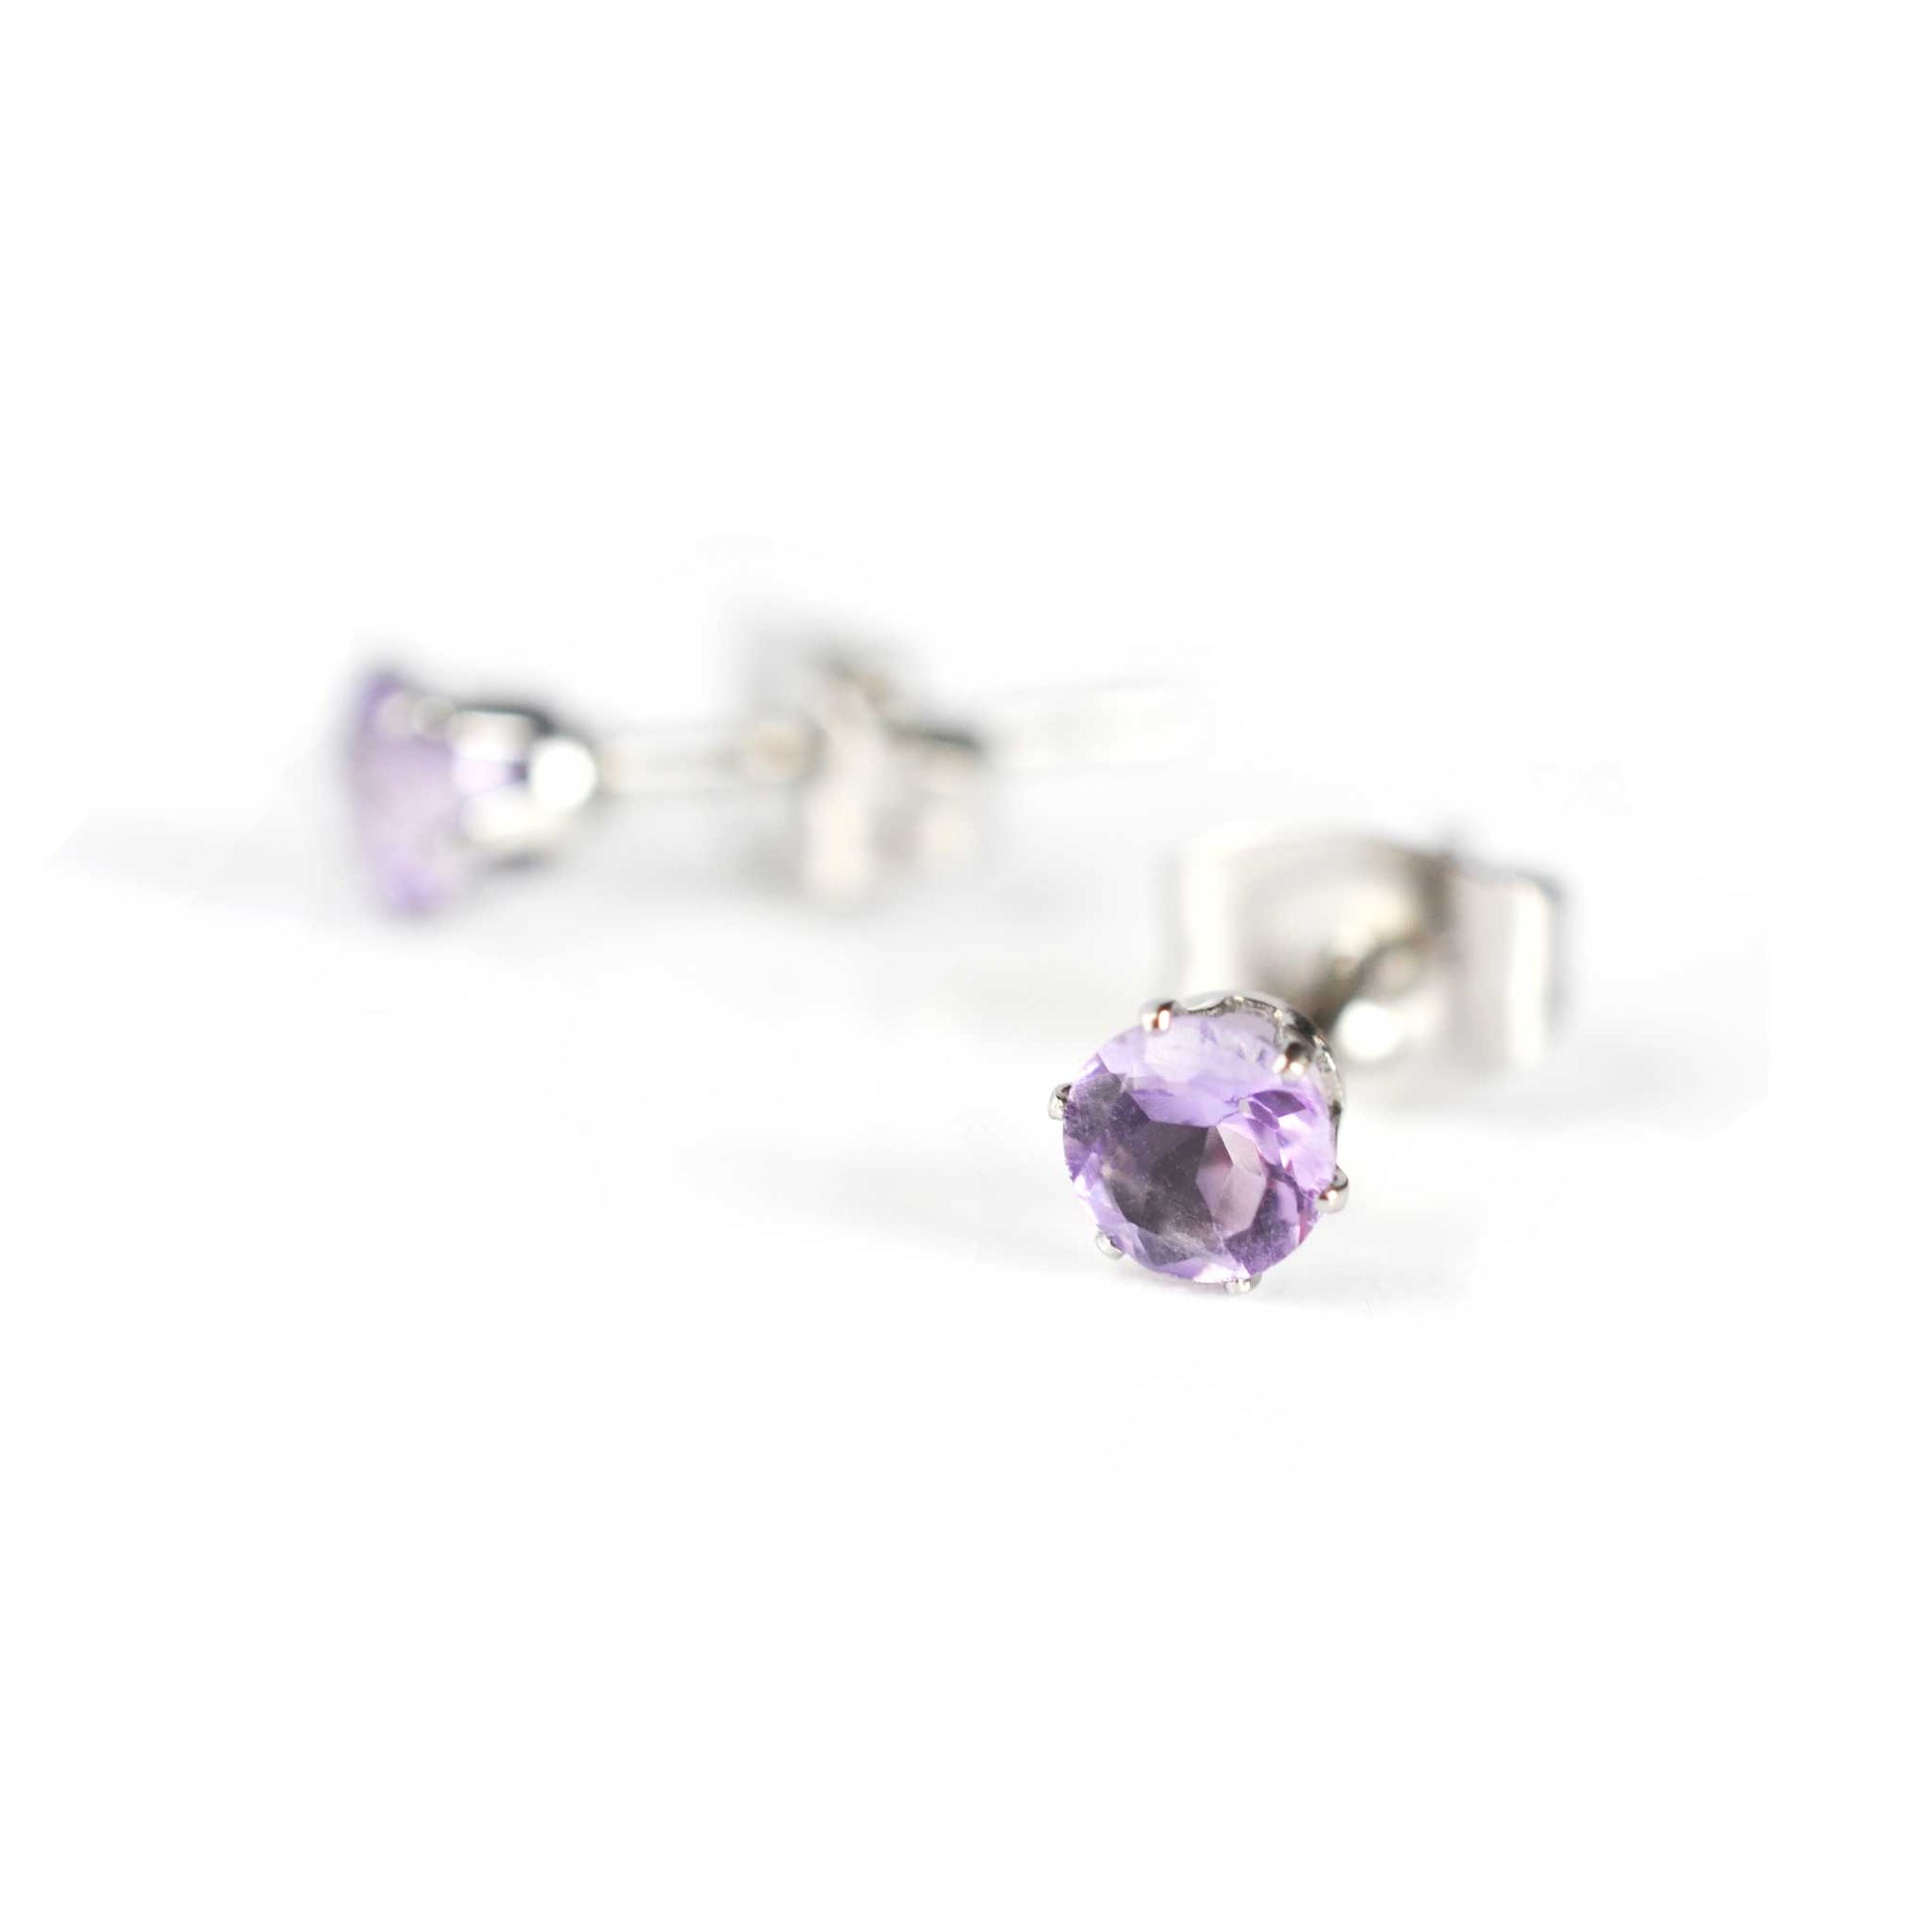 Tiny purple Amethyst stud earrings on white background